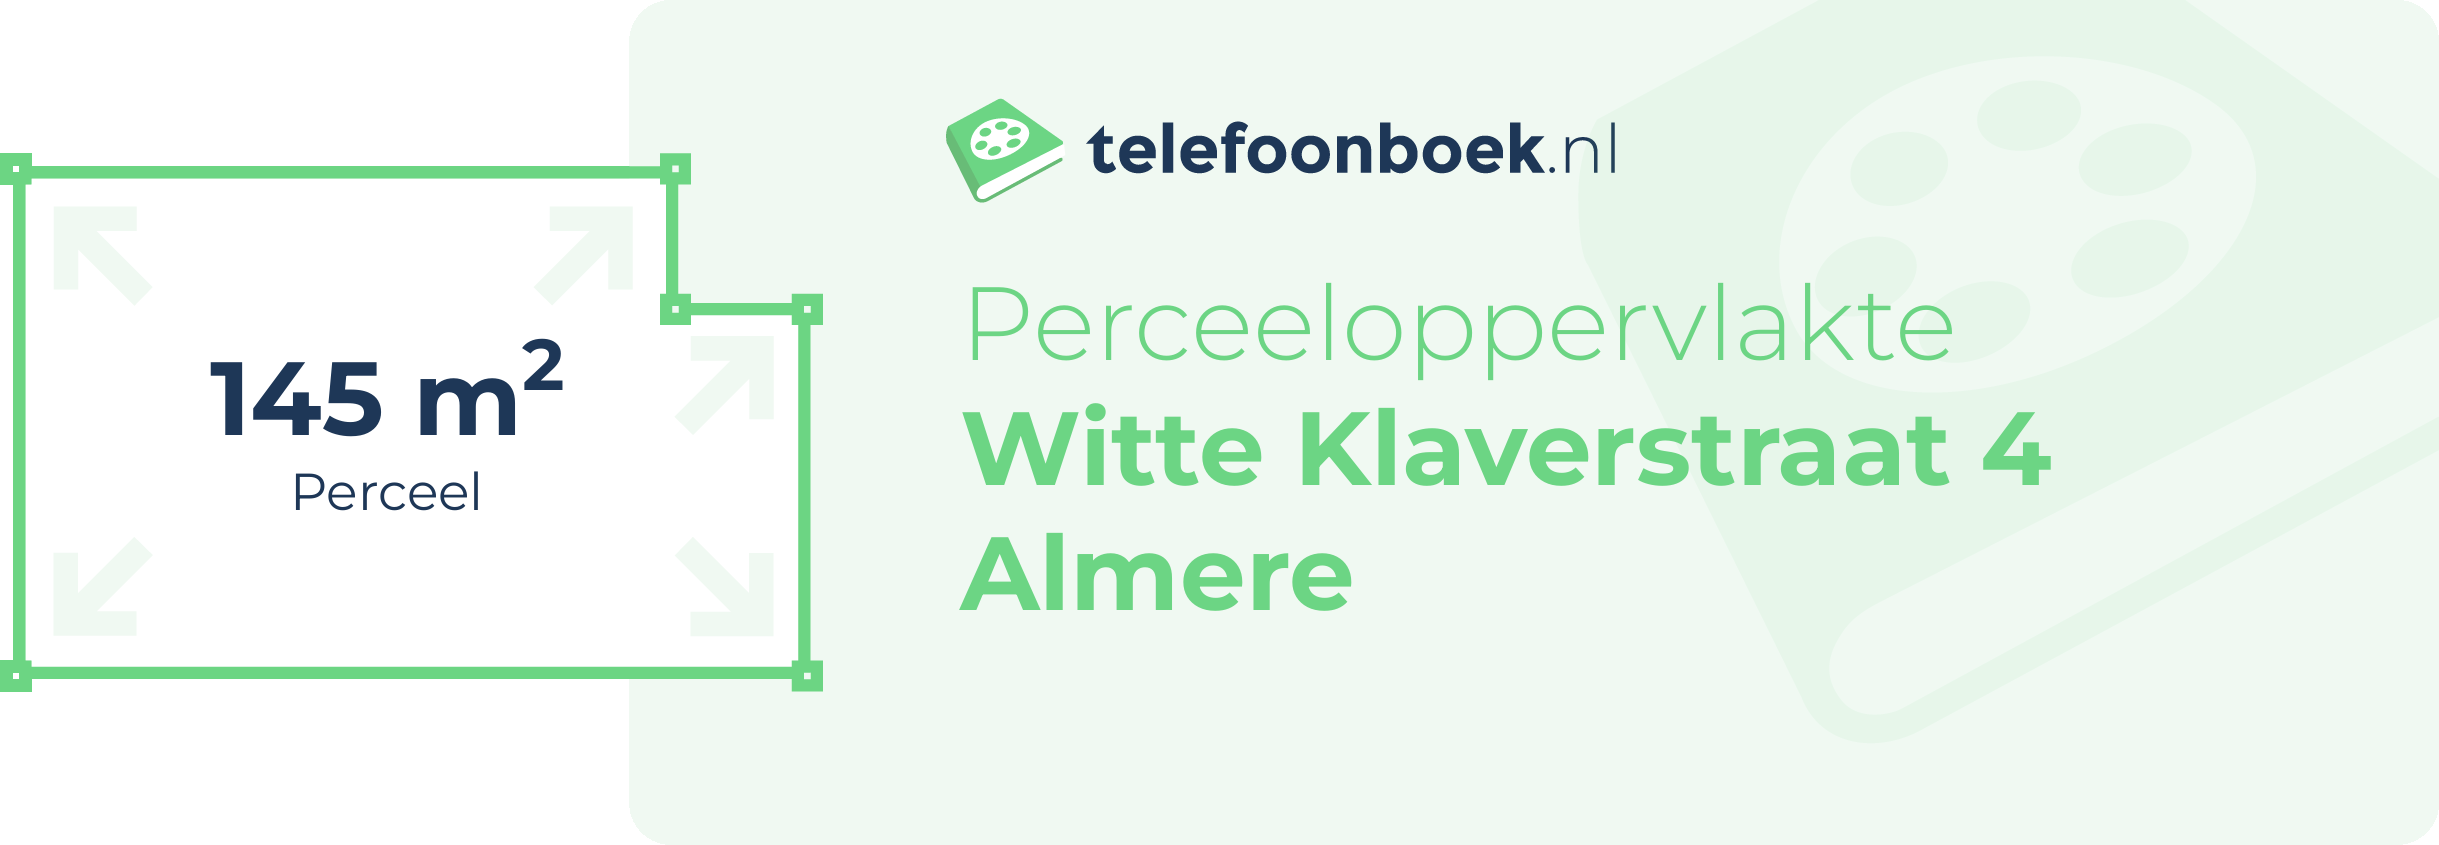 Perceeloppervlakte Witte Klaverstraat 4 Almere